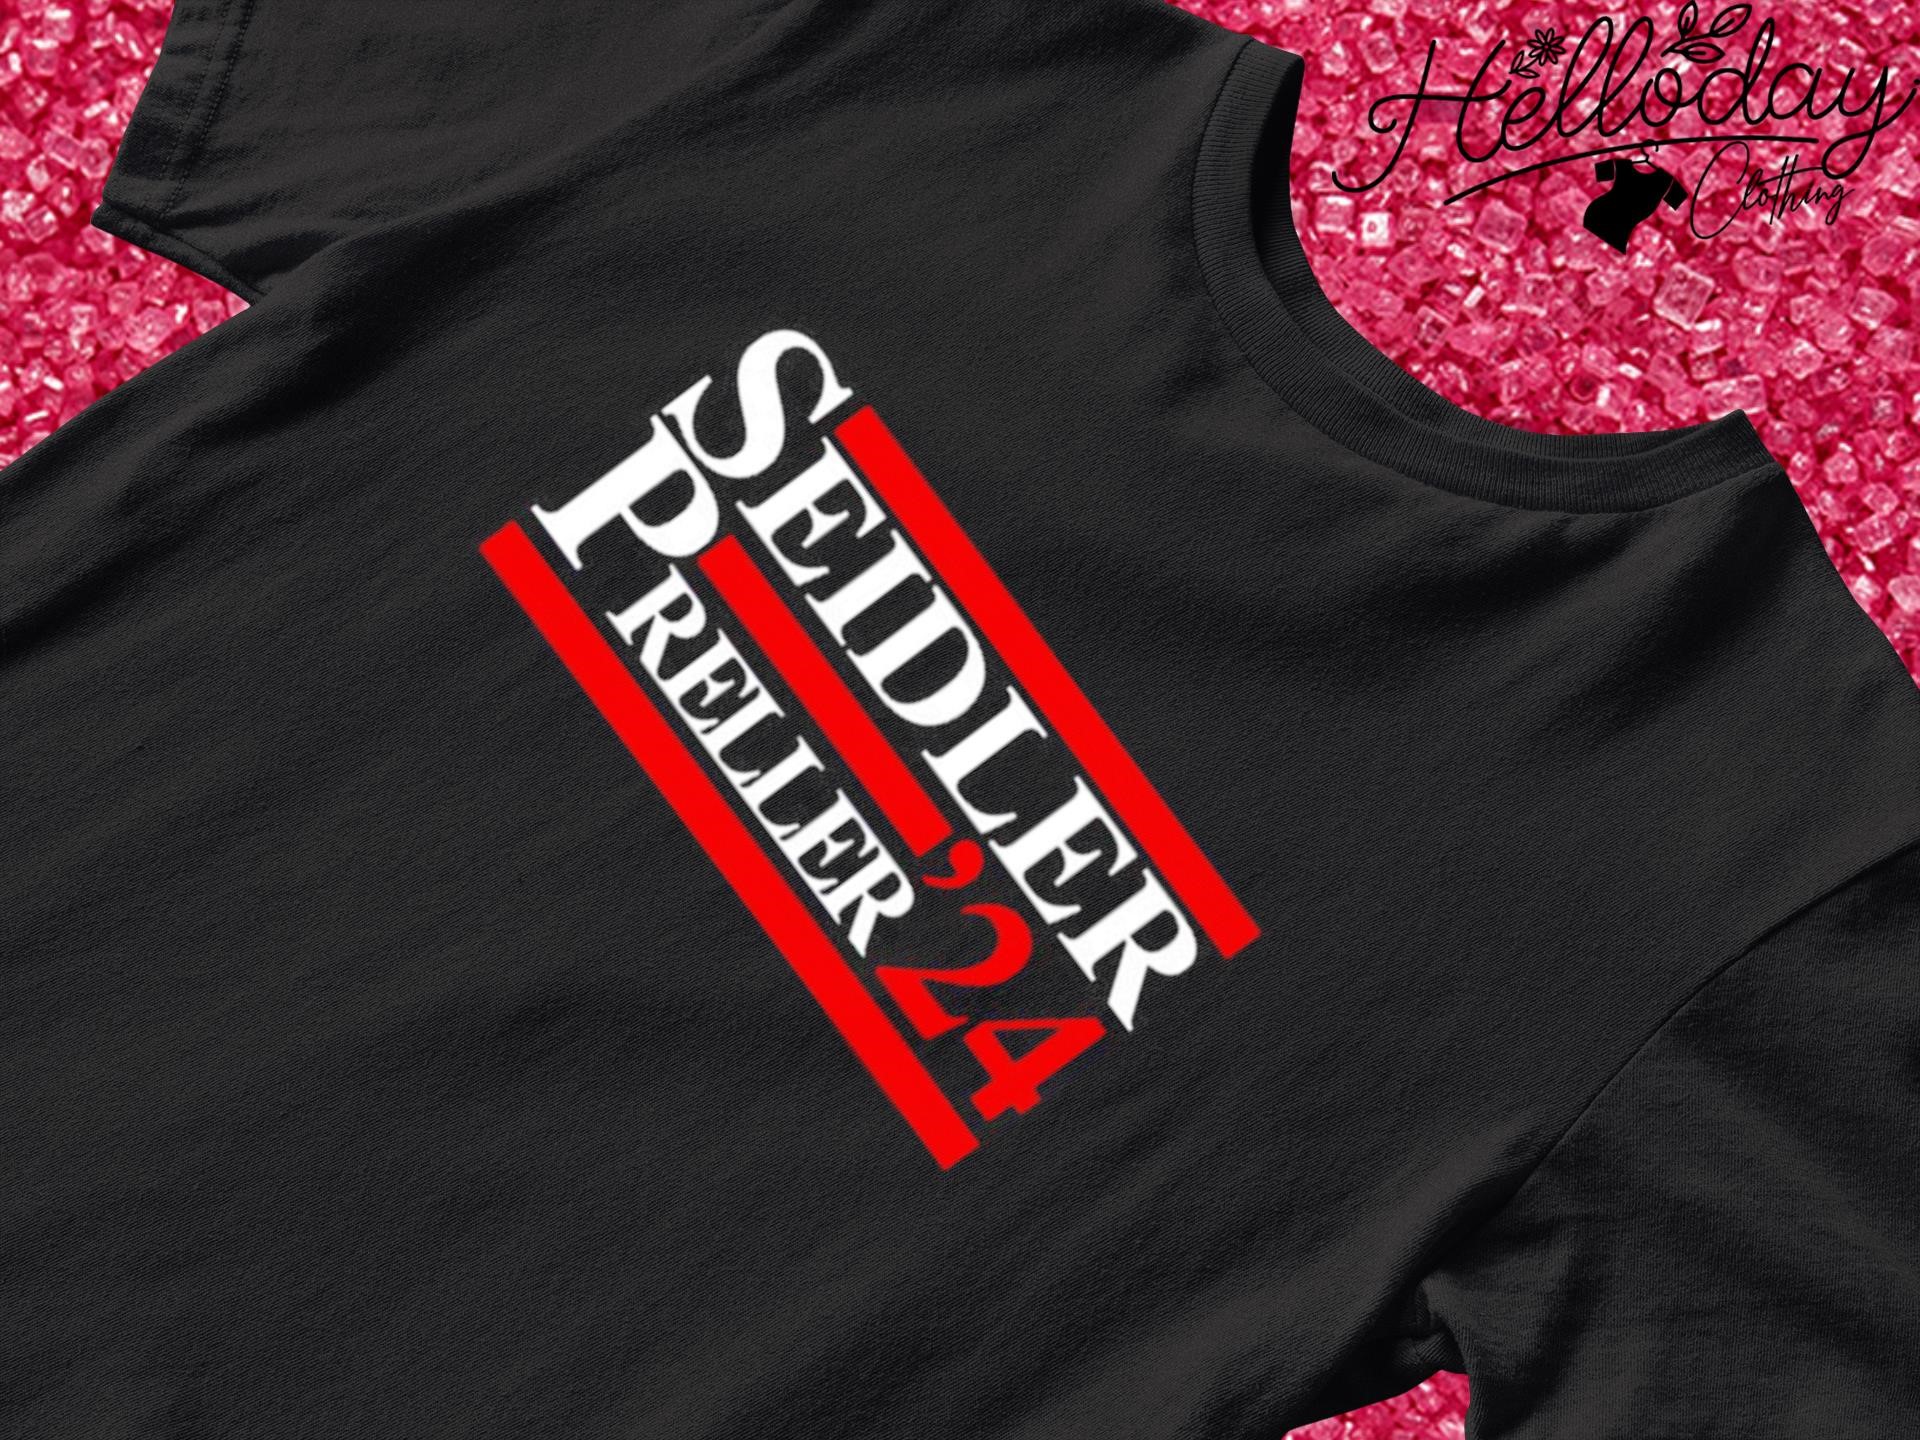 Seidler Preller 24 shirt